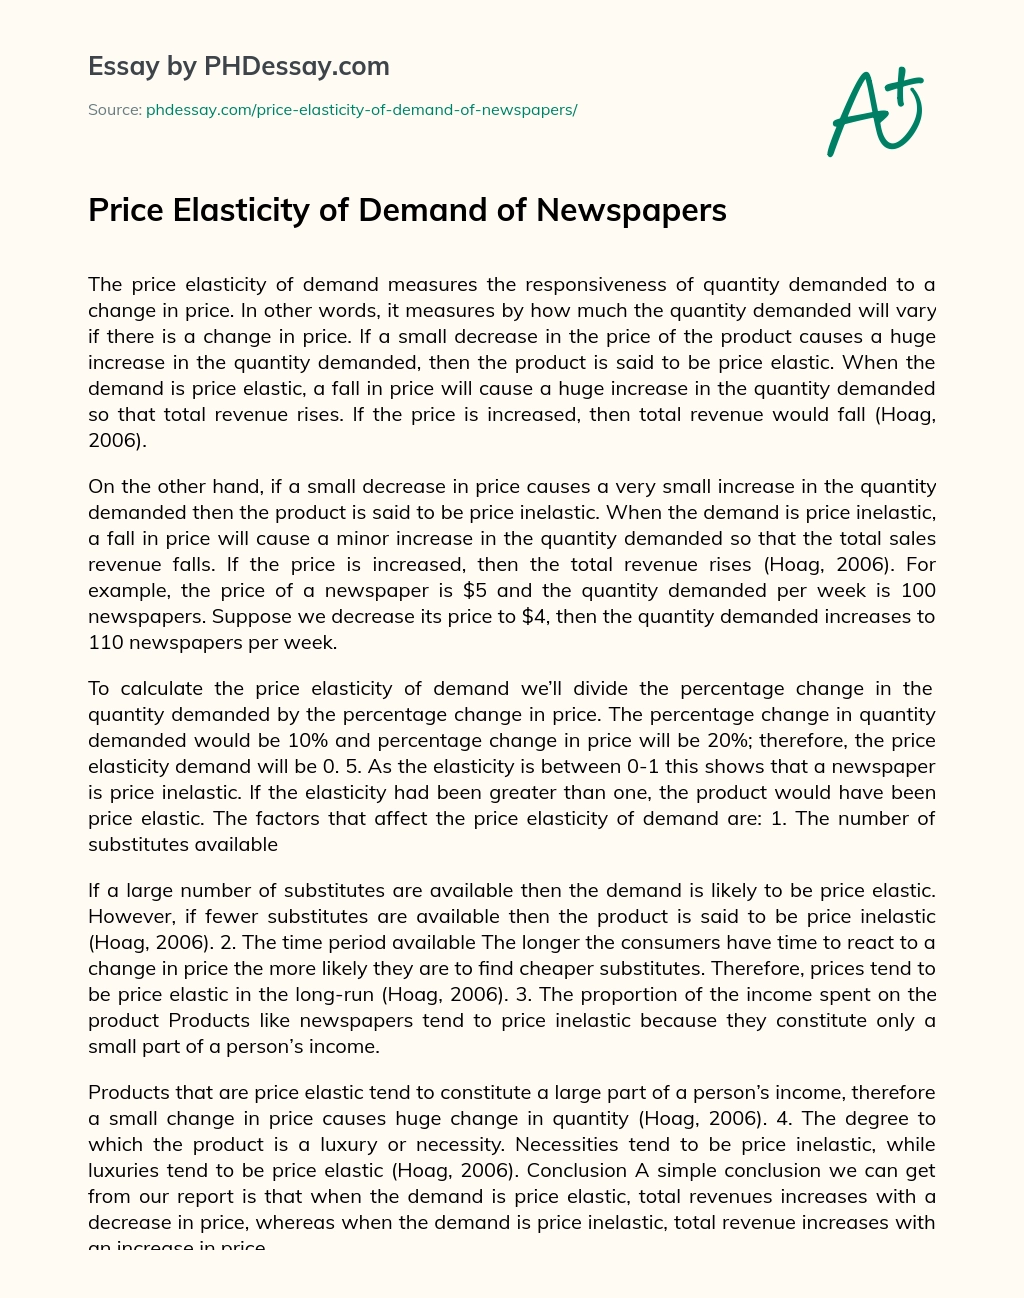 Price Elasticity of Demand of Newspapers essay